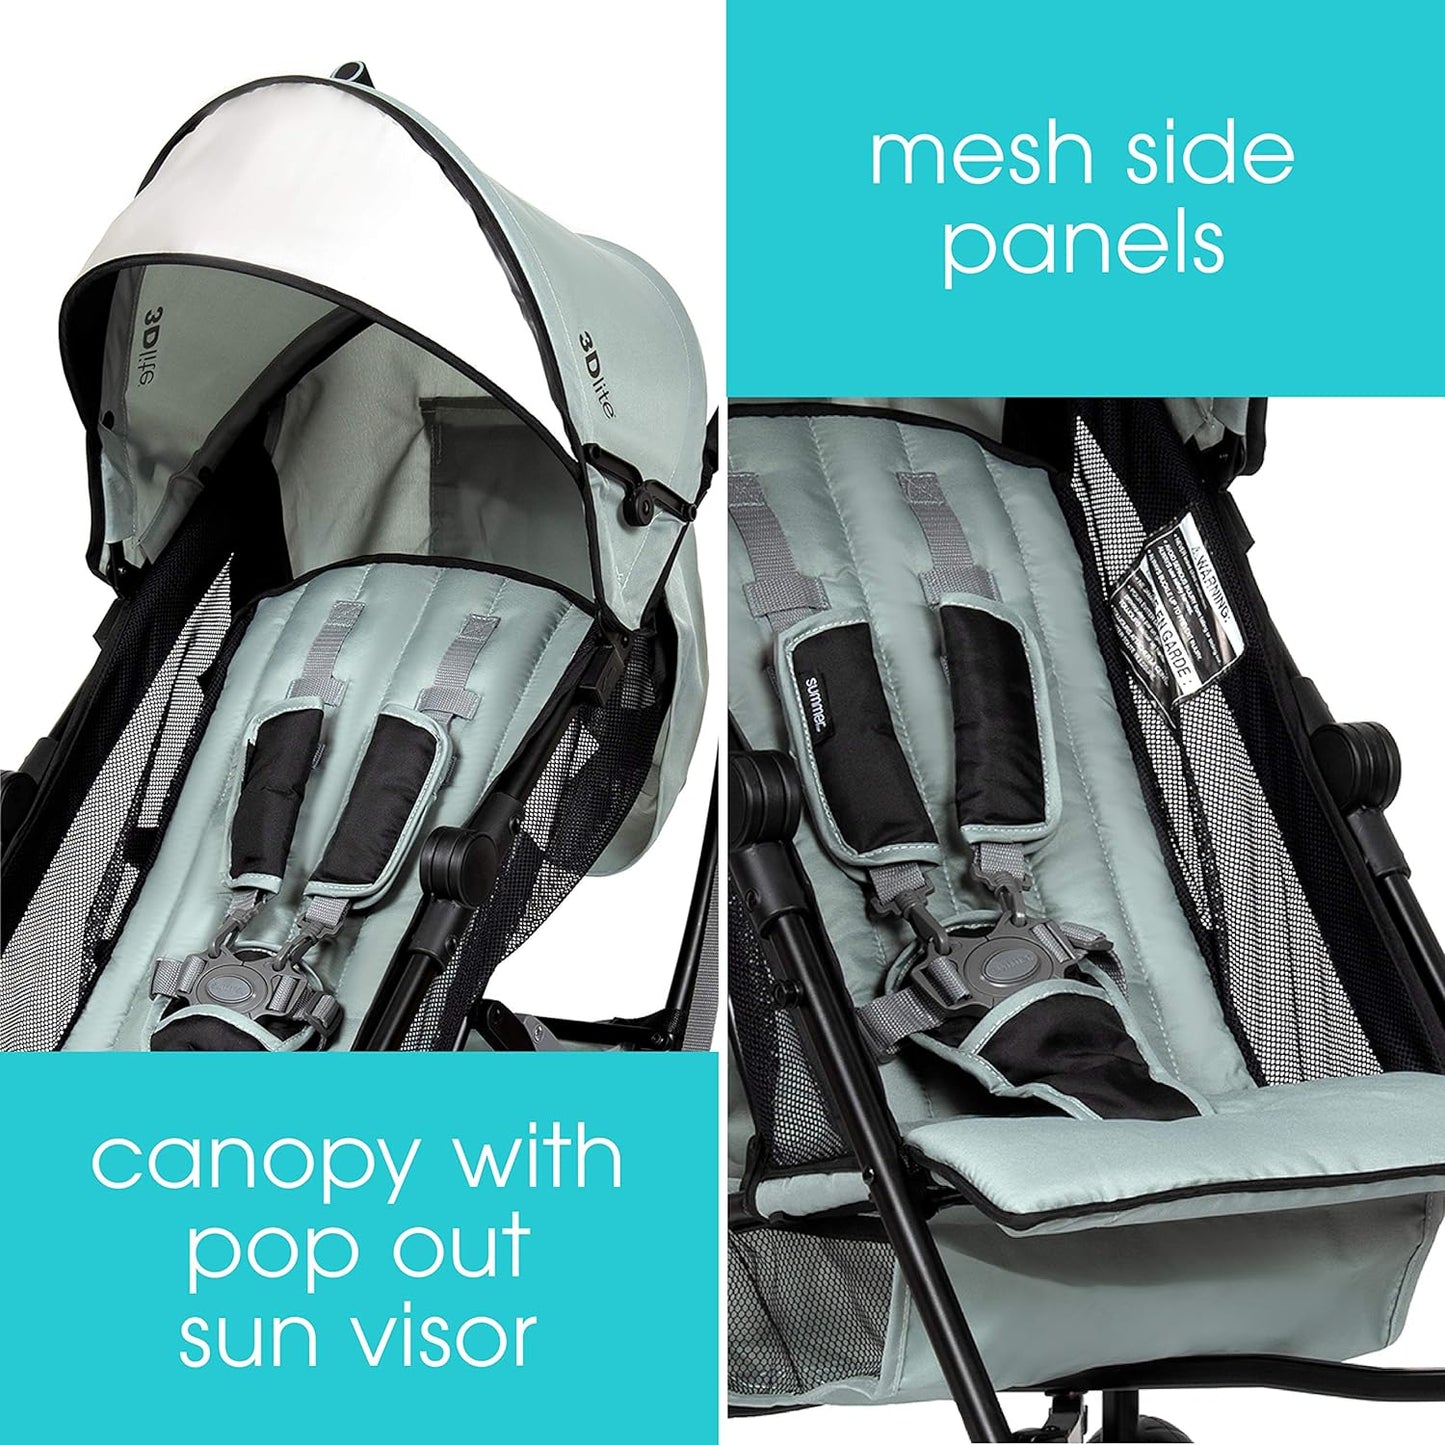 Summer Infant 3Dlite Convenience Stroller, Black – Lightweight, with Aluminum Frame, Large Seat Area, Mesh Siding, 4 Position Recline, Extra Large Storage Basket – for Travel